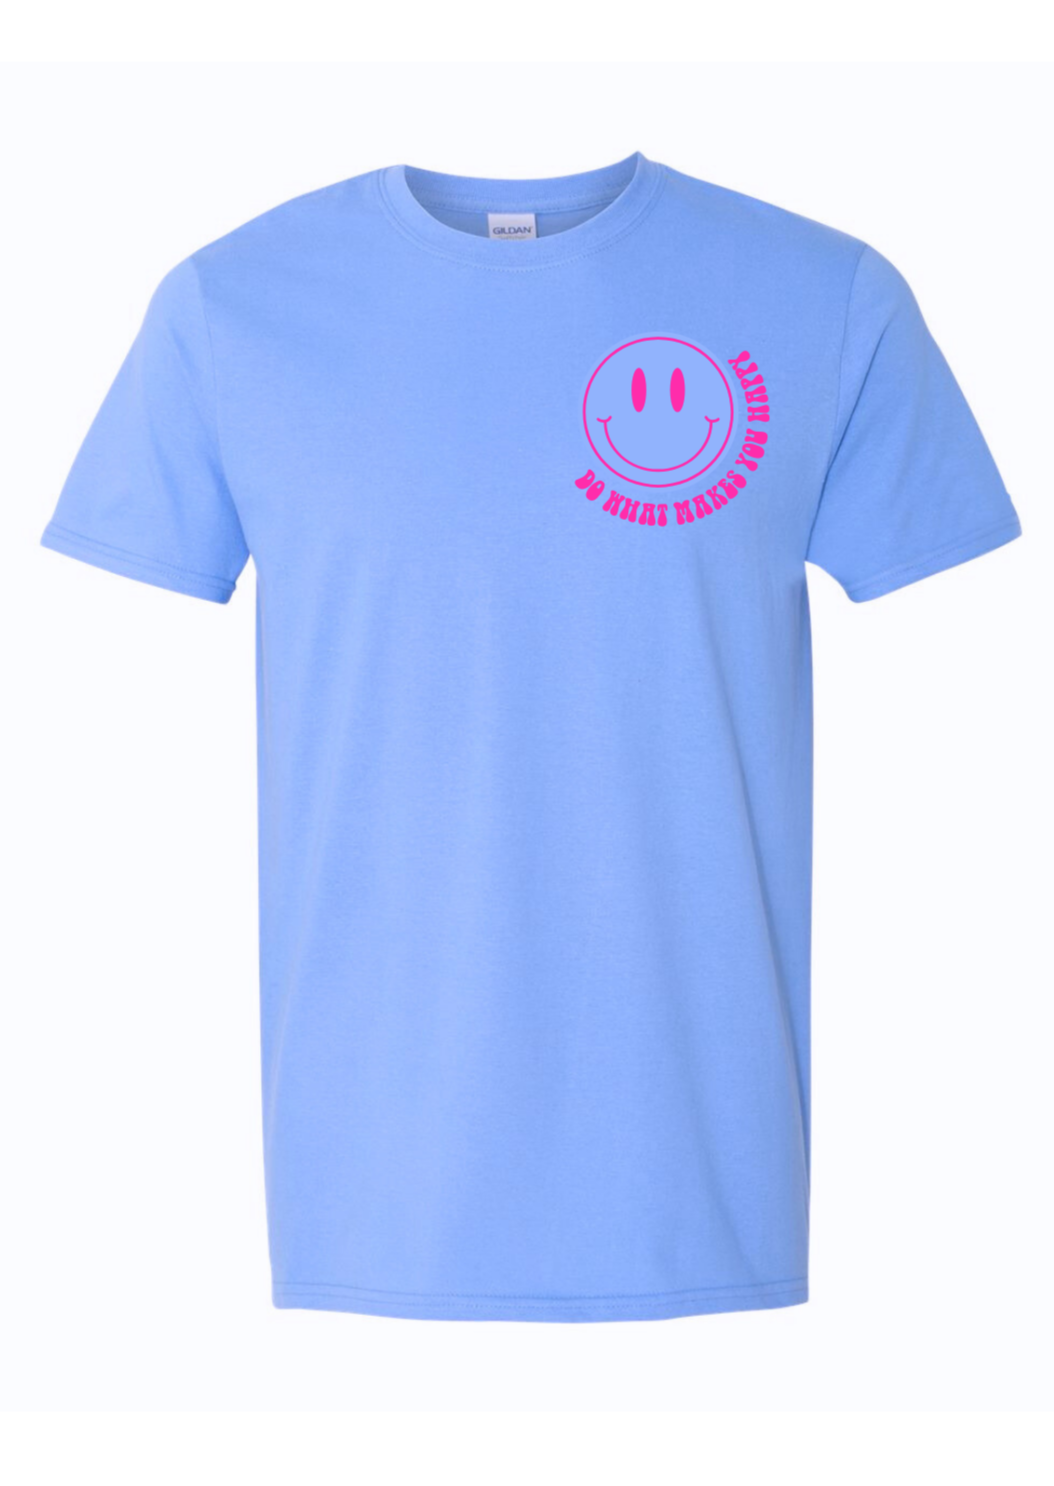 carolina blue+pink do what makes you happy t-shirt